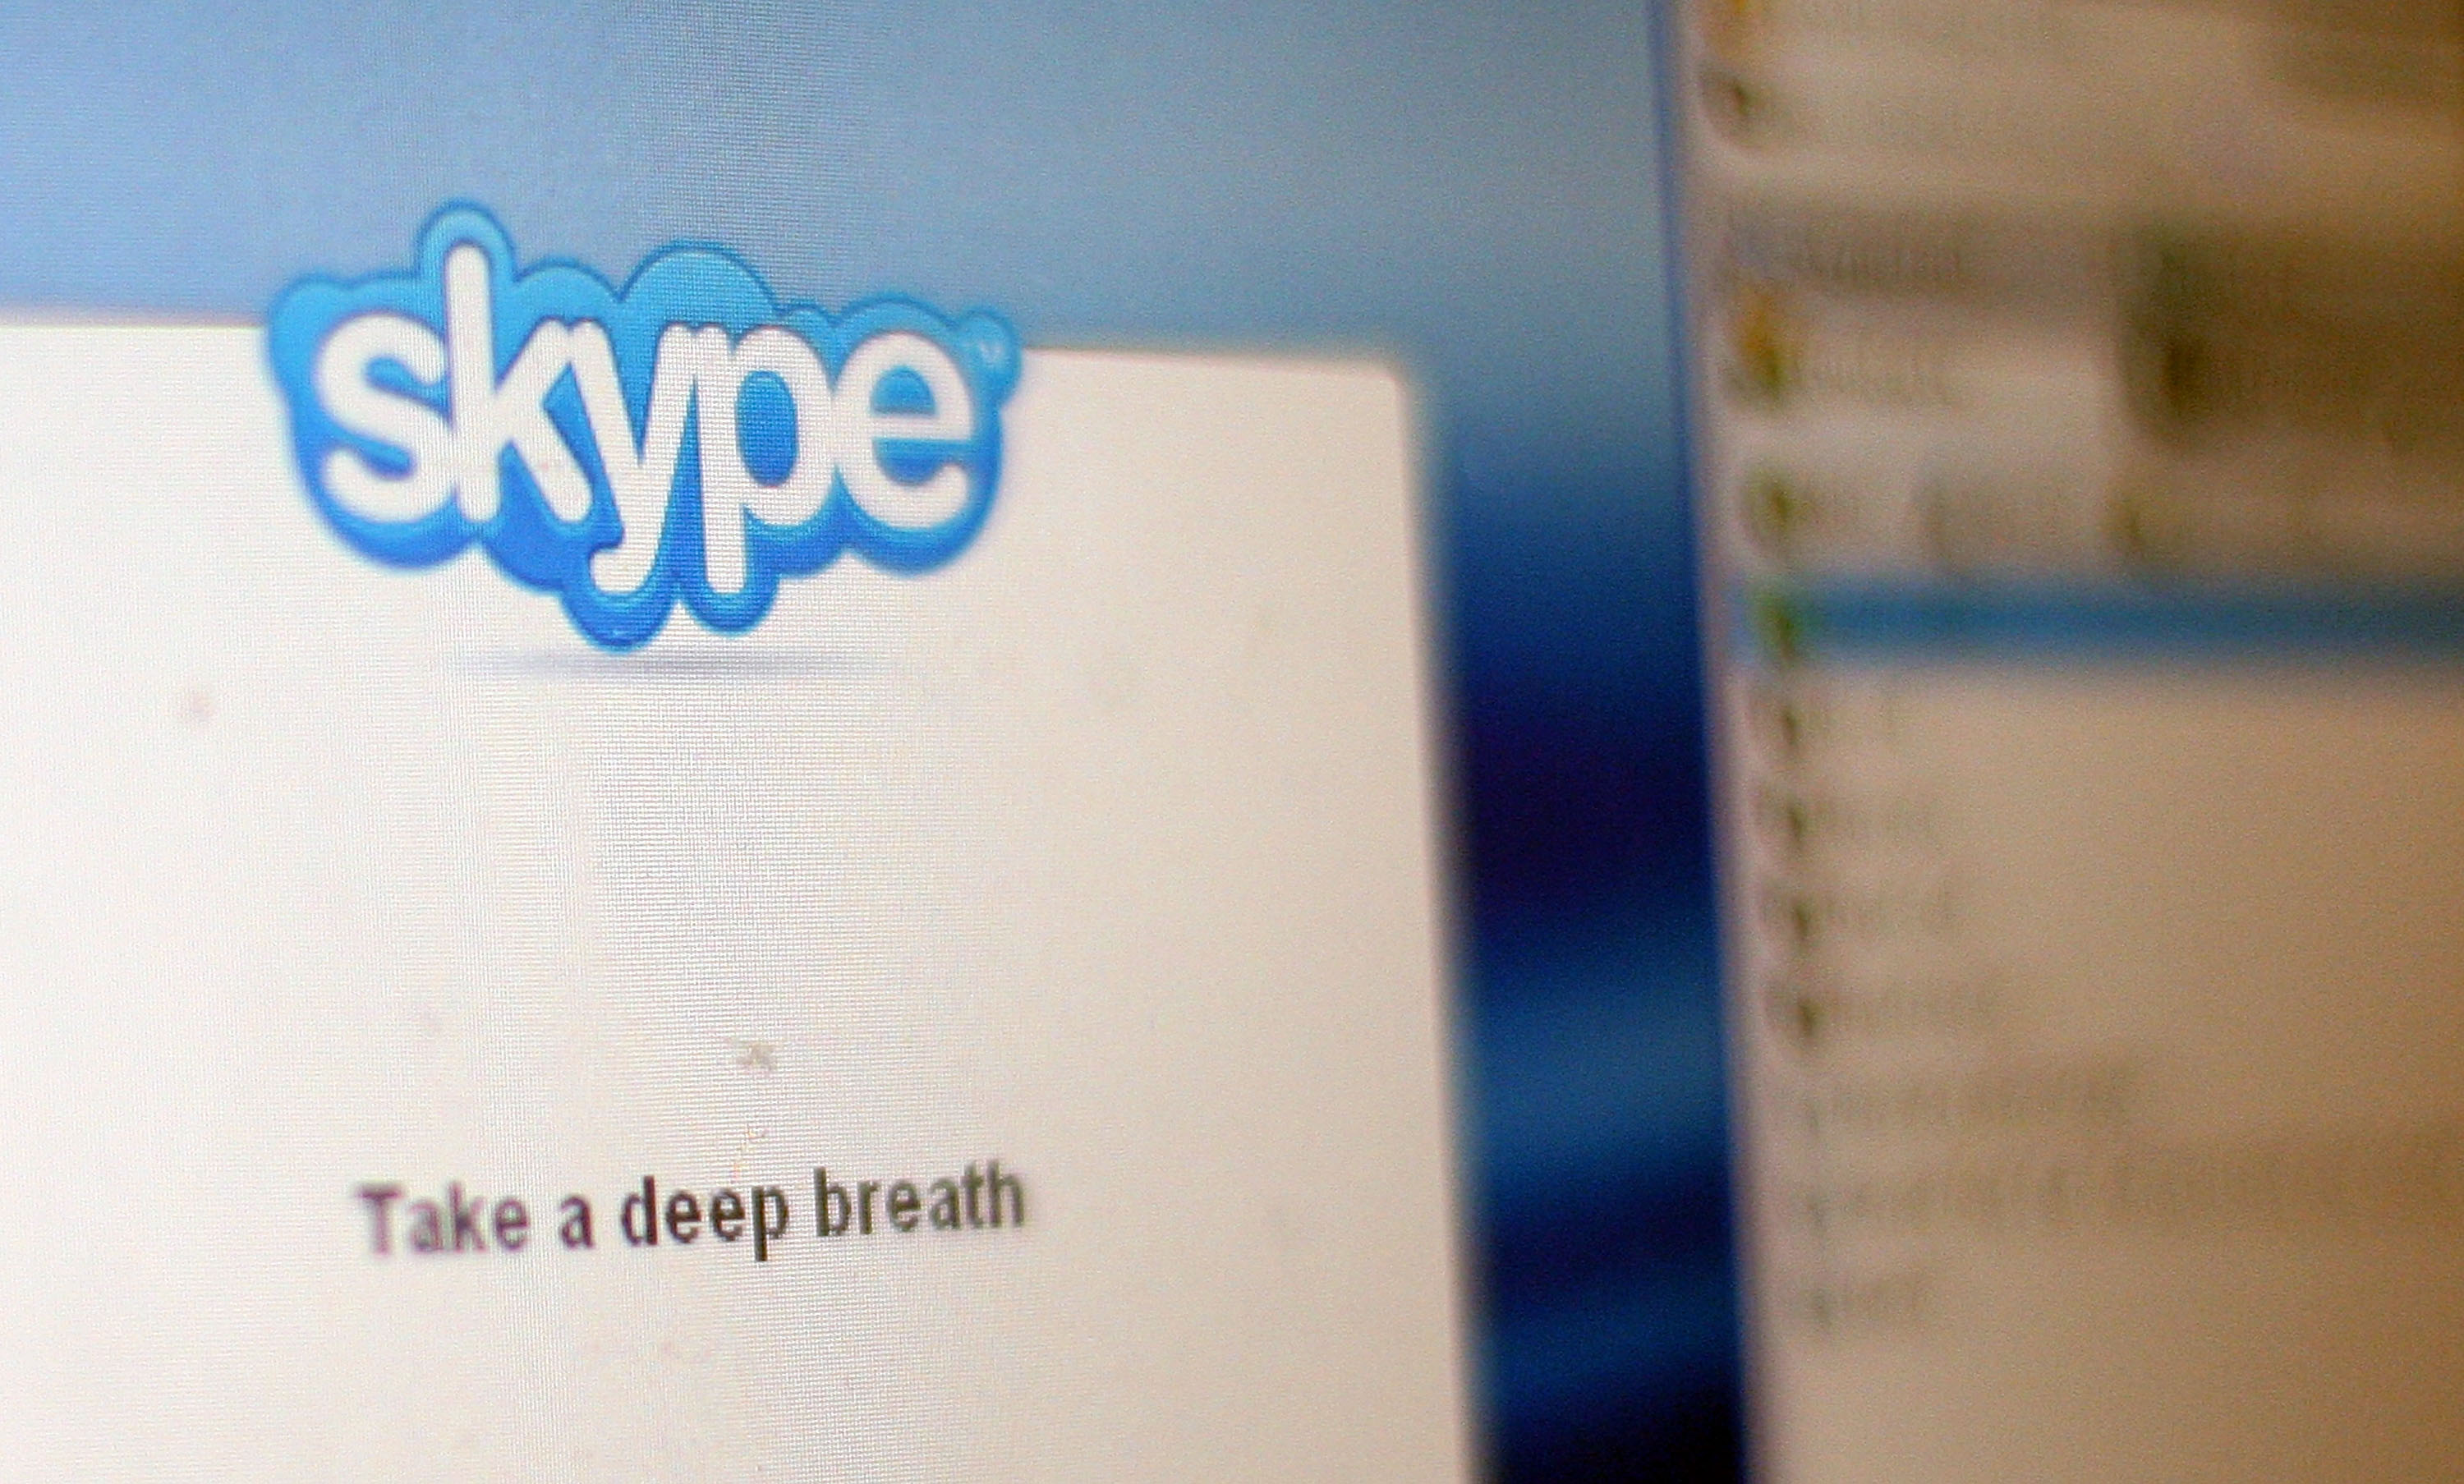 Ebay To Sell Majority Stake In Internet Phone Company Skype